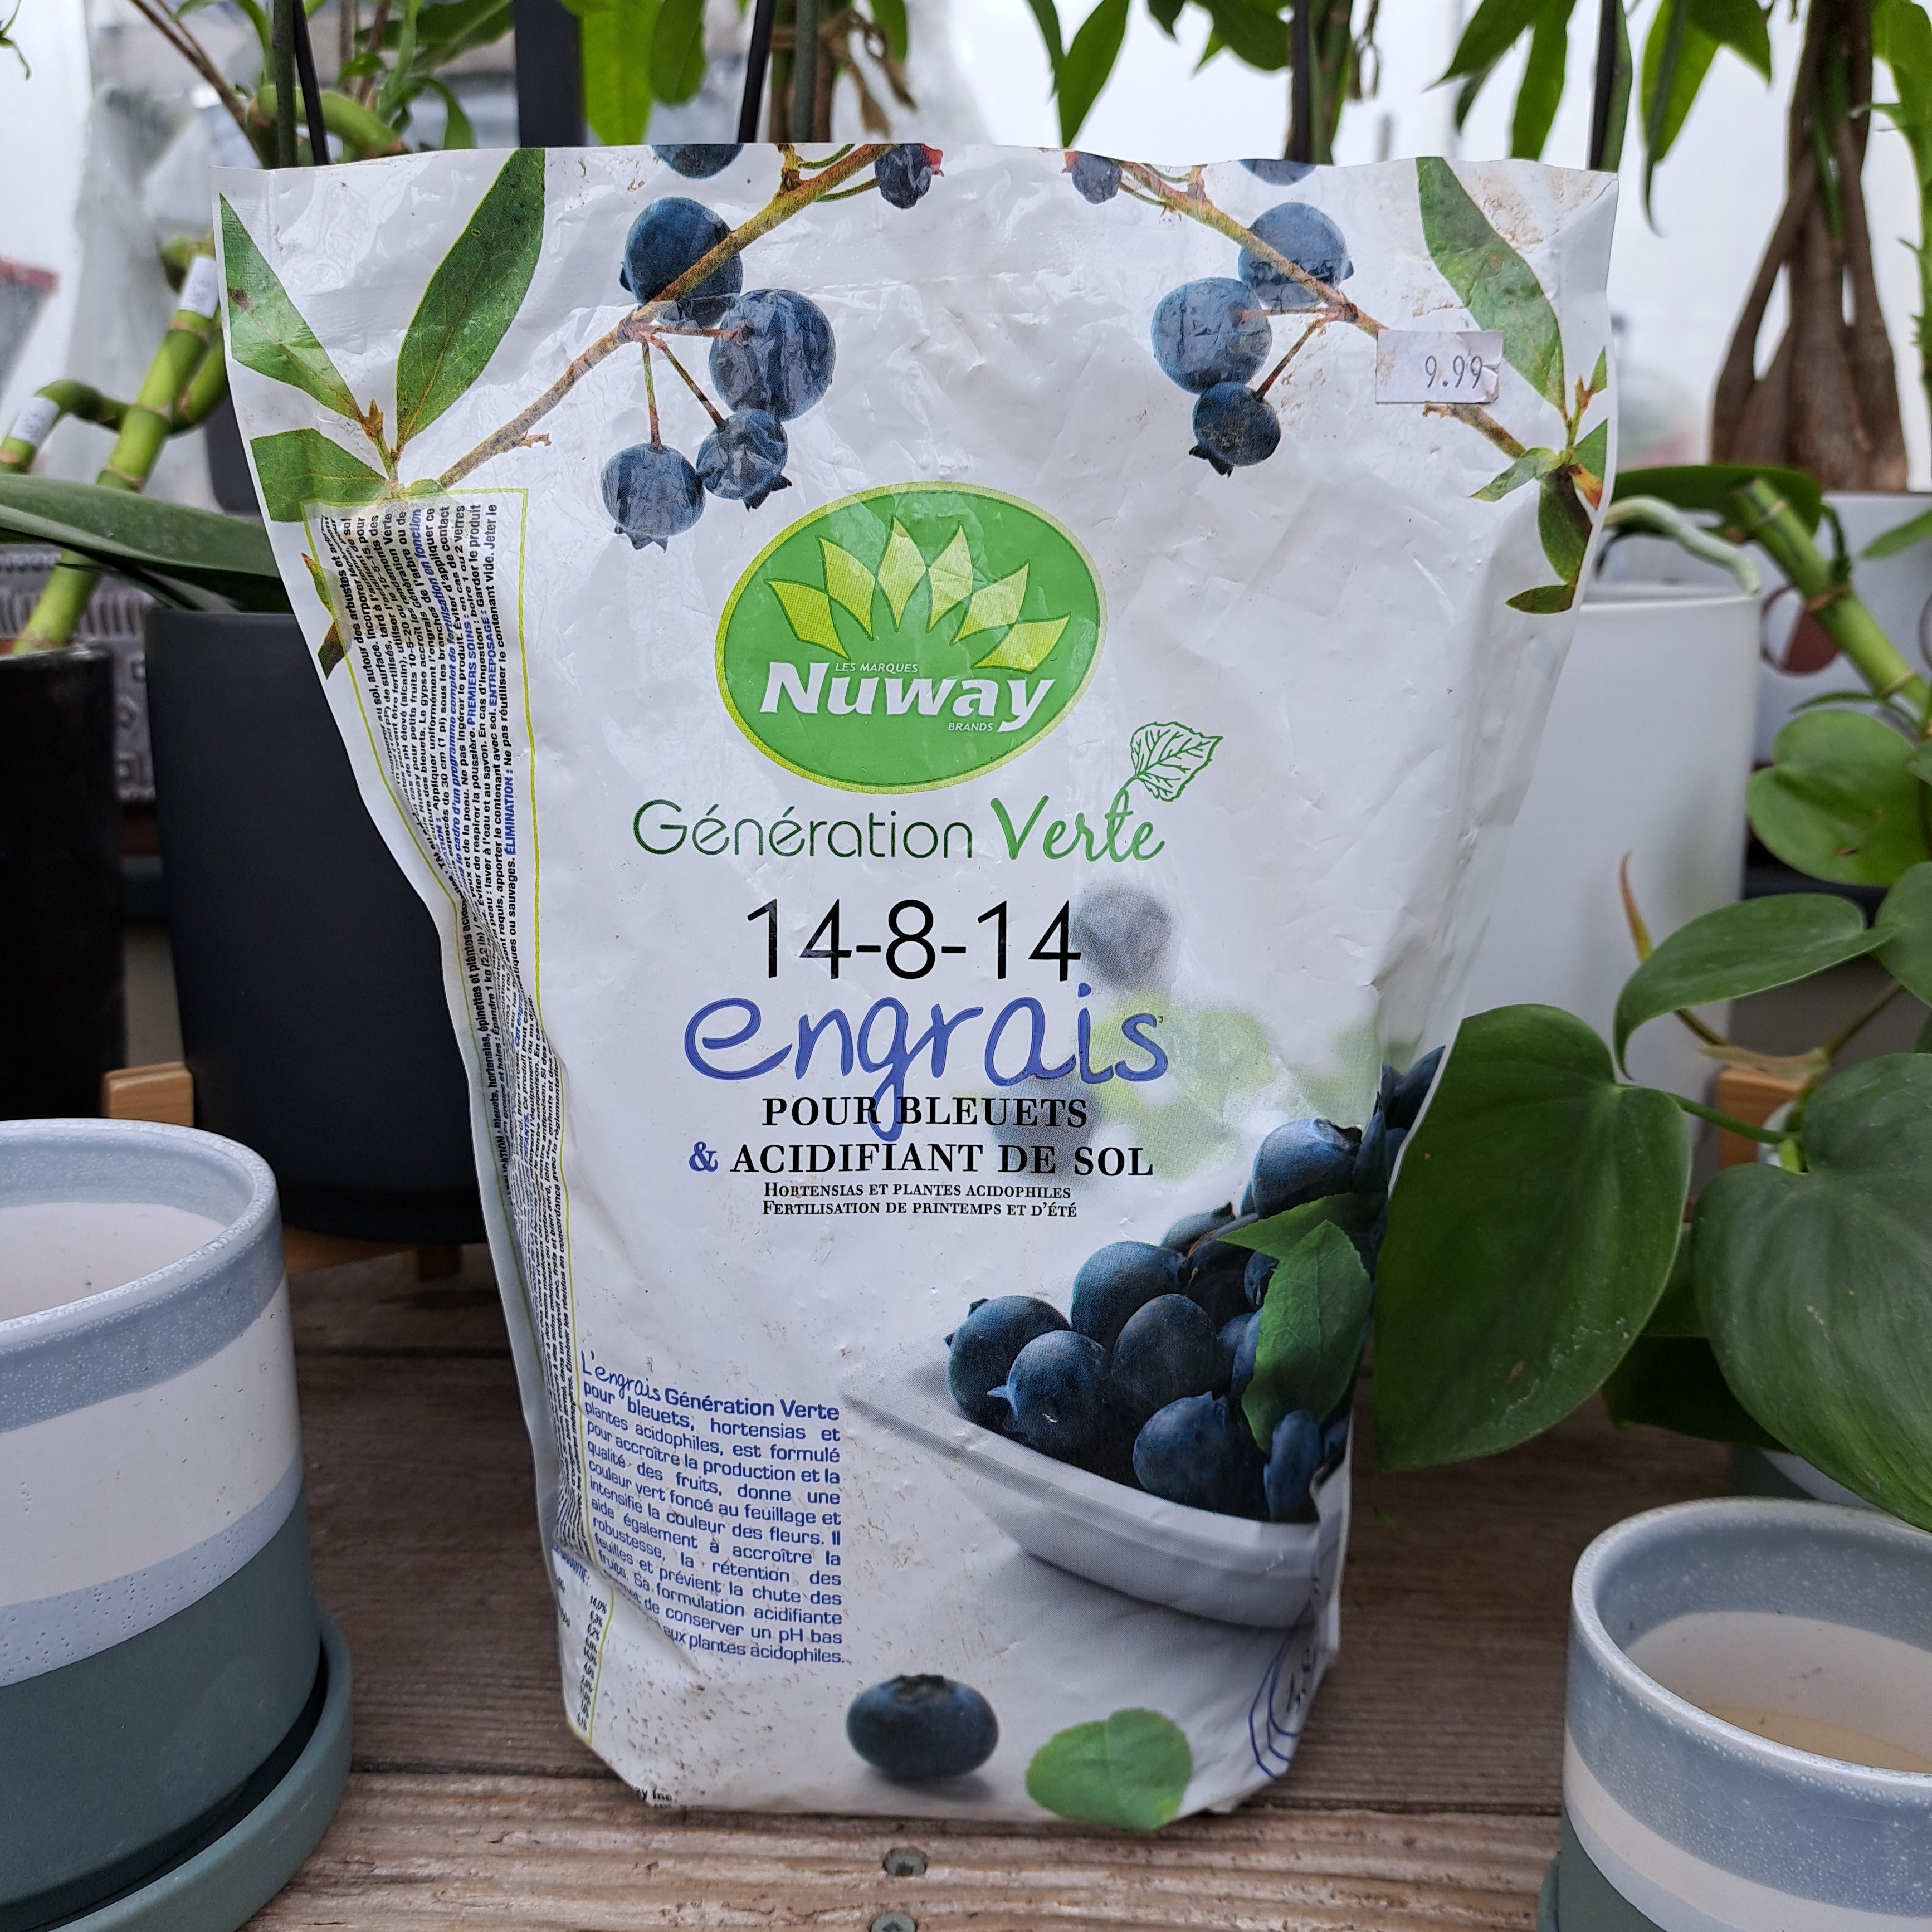 Blueberry fertilizer and soil acidifier Nuway 14-8-14